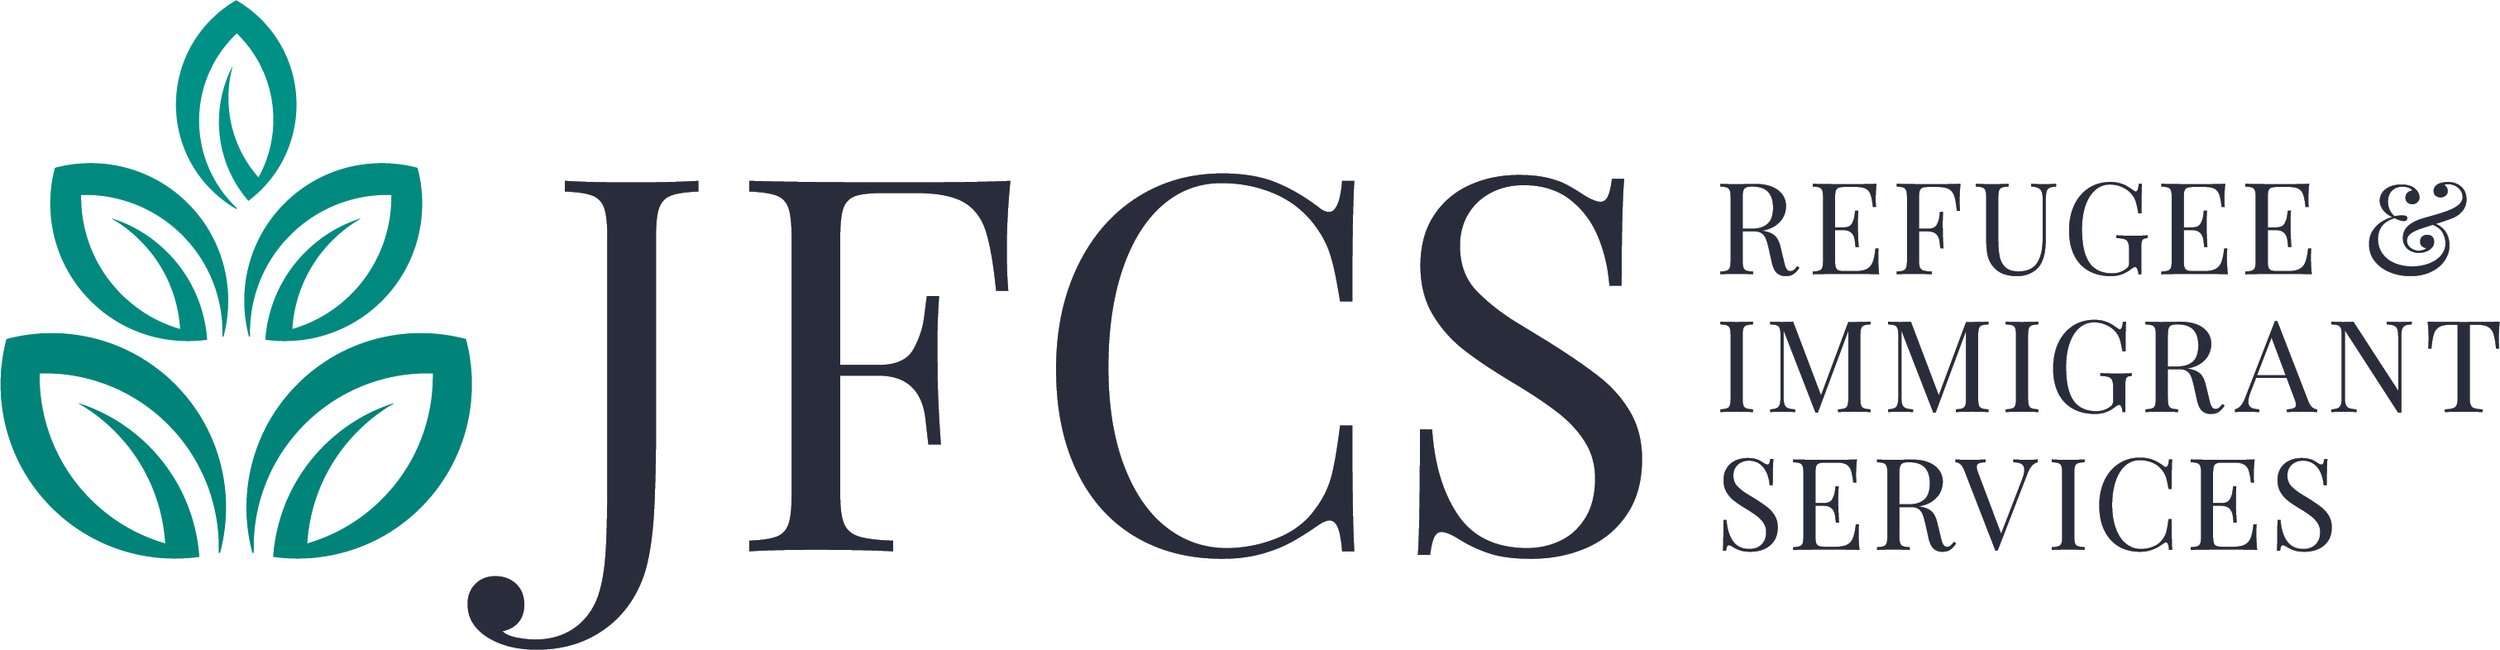 JFCS_Logo_RefugeeImmigrantServices_PMS.jpg